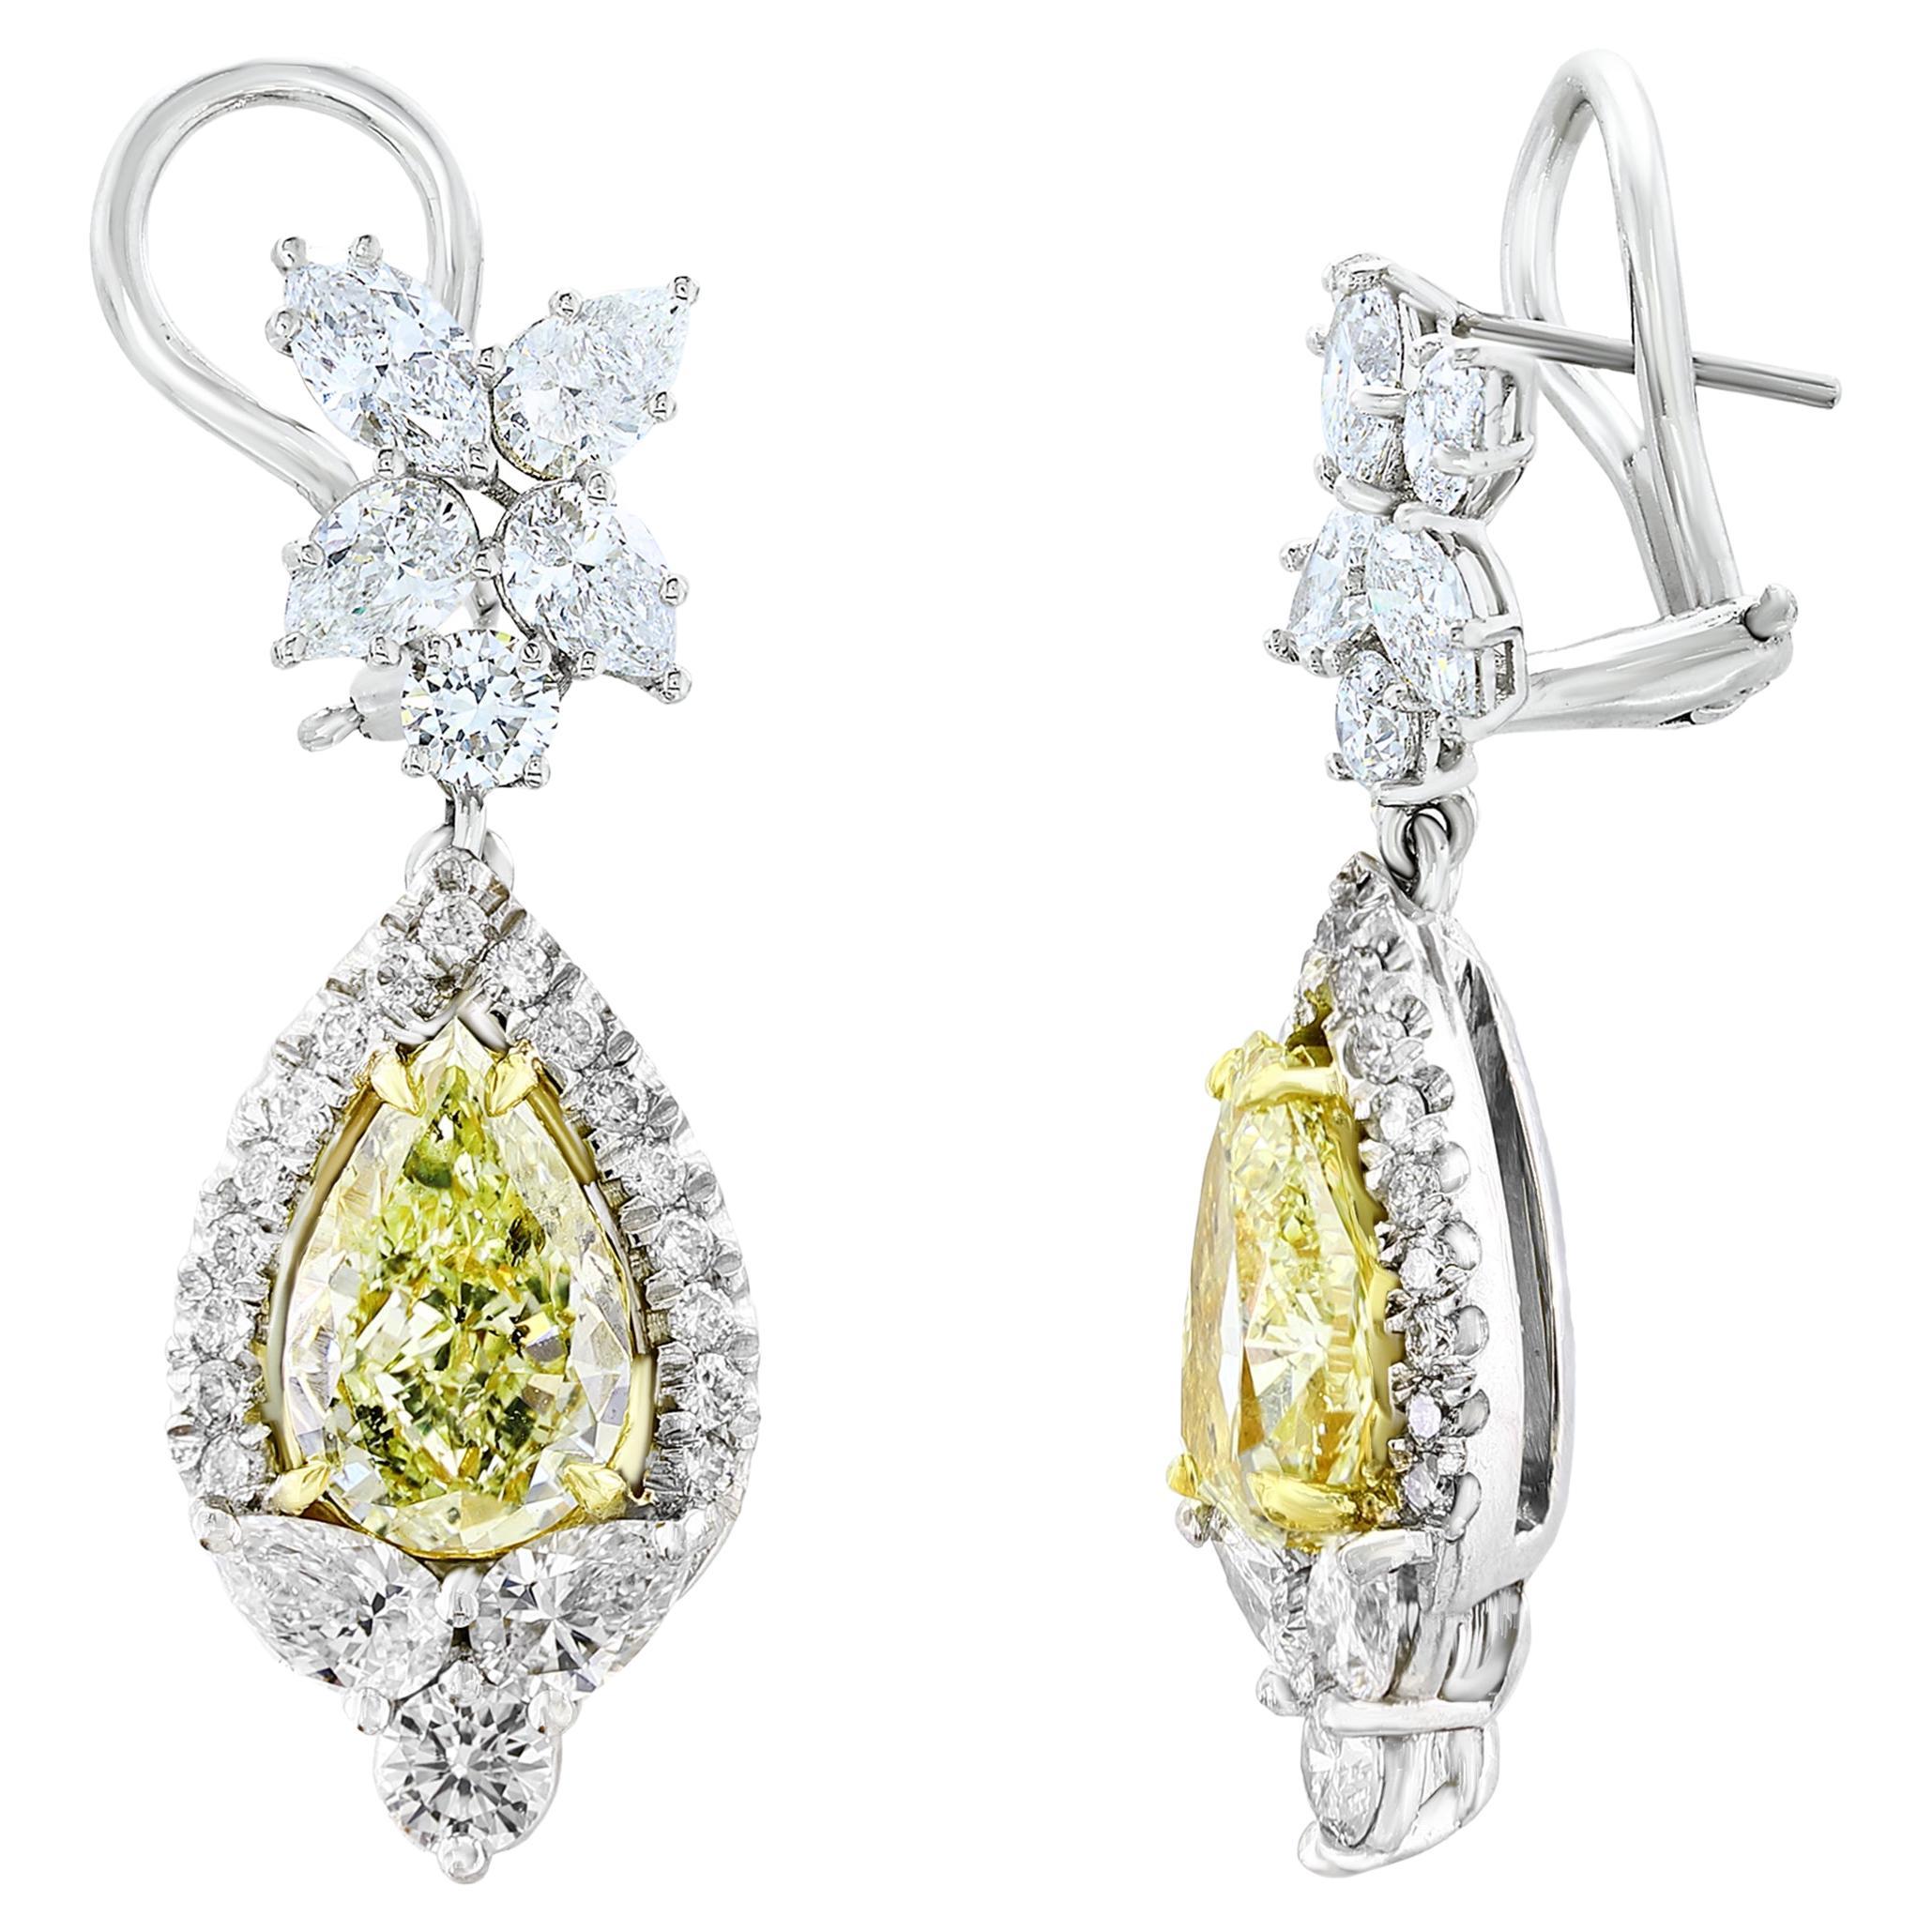 3.79 Carat Fancy Yellow Diamond and Diamond Drop Earrings in 18K White Gold For Sale